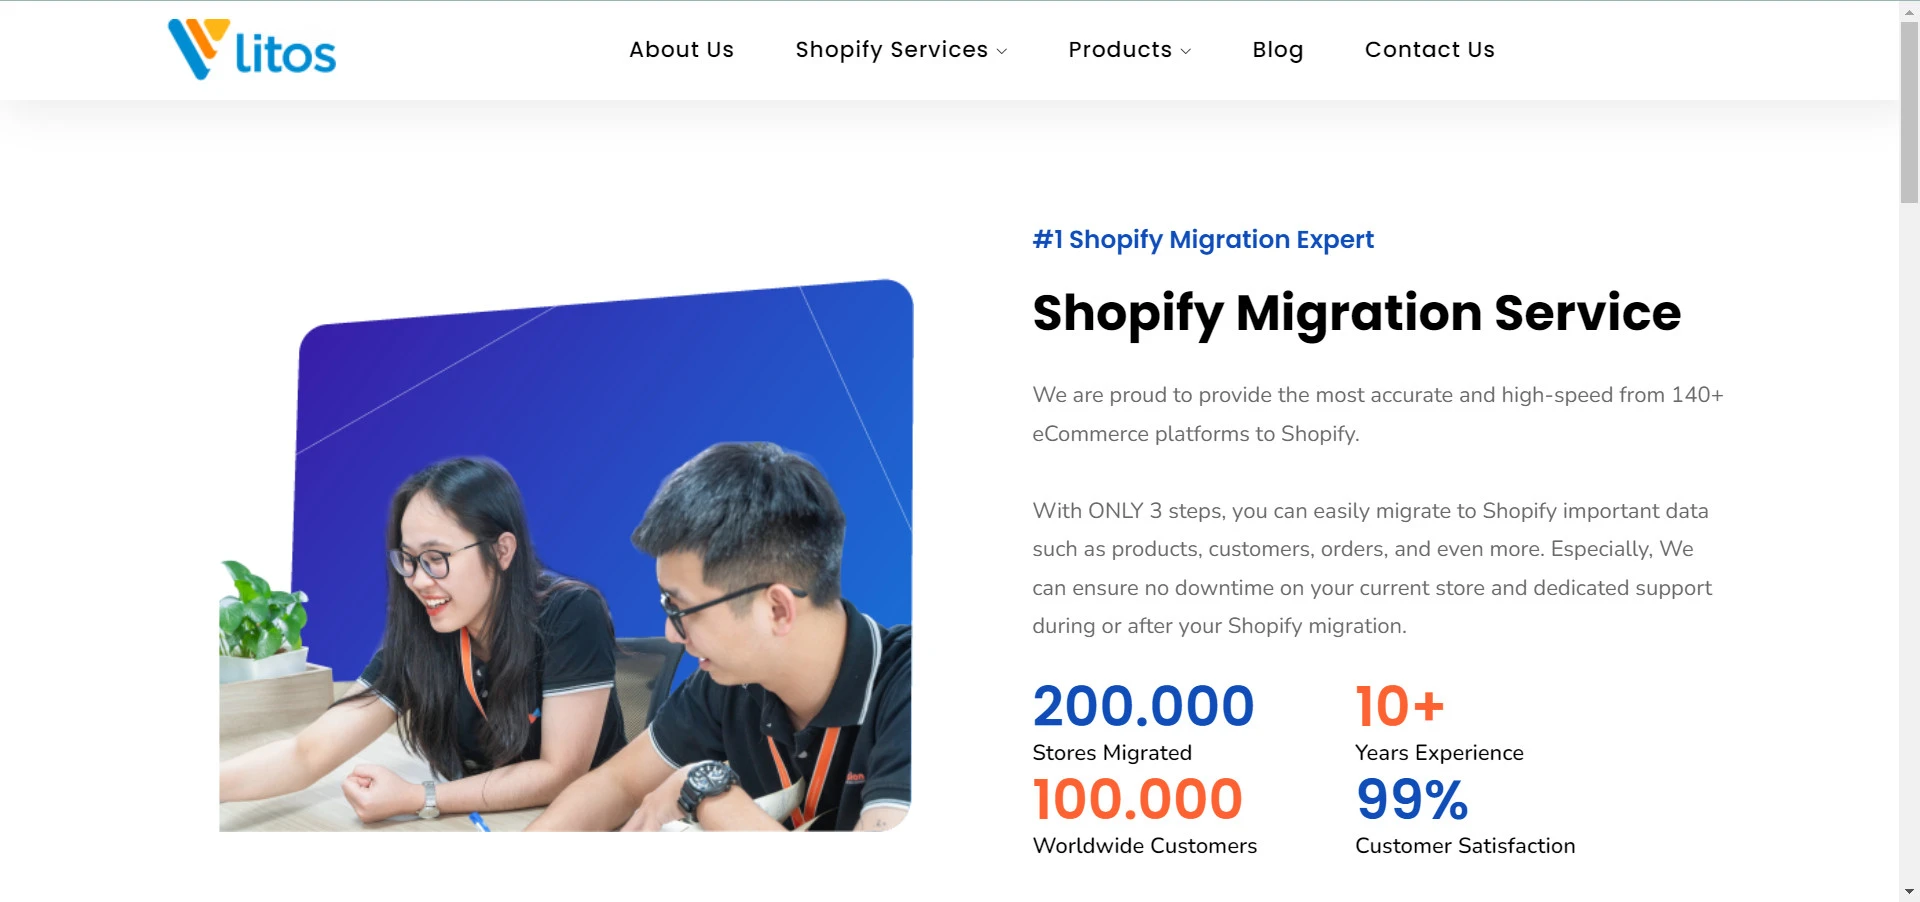 Litos’s Shopify Migration Service